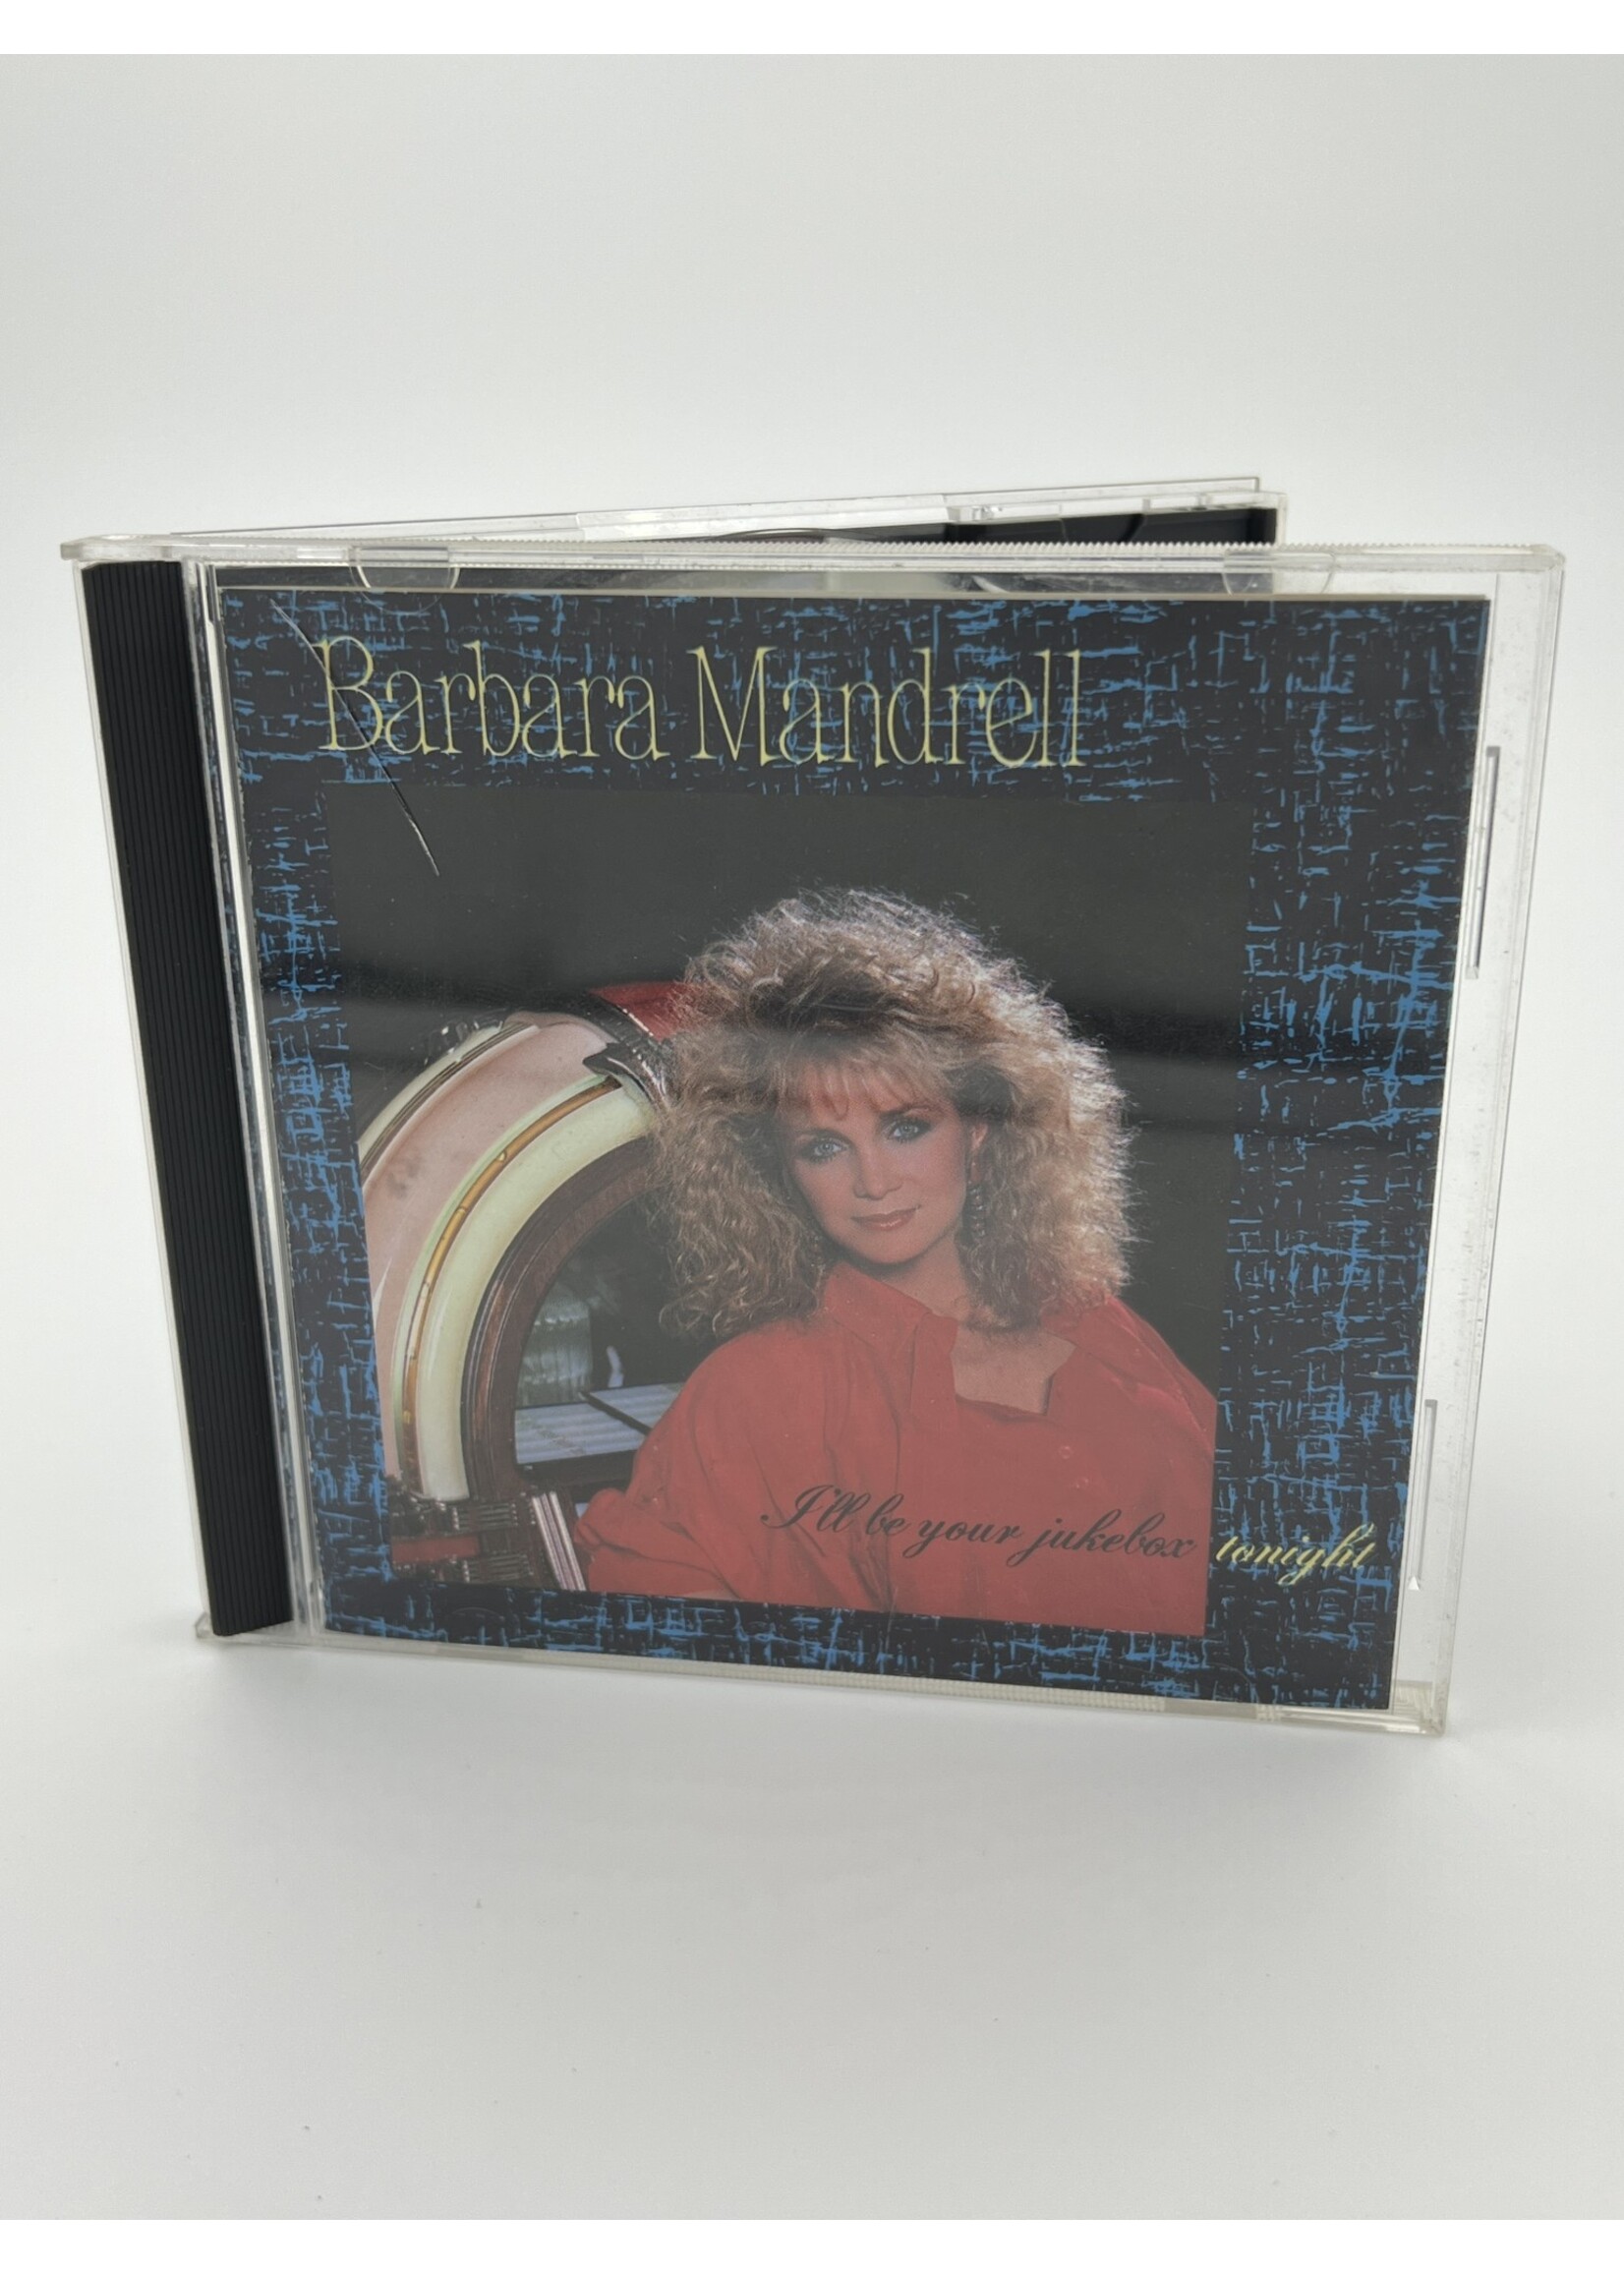 CD   Barbara Mandrell Ill Be Your Jukebox Tonight CD